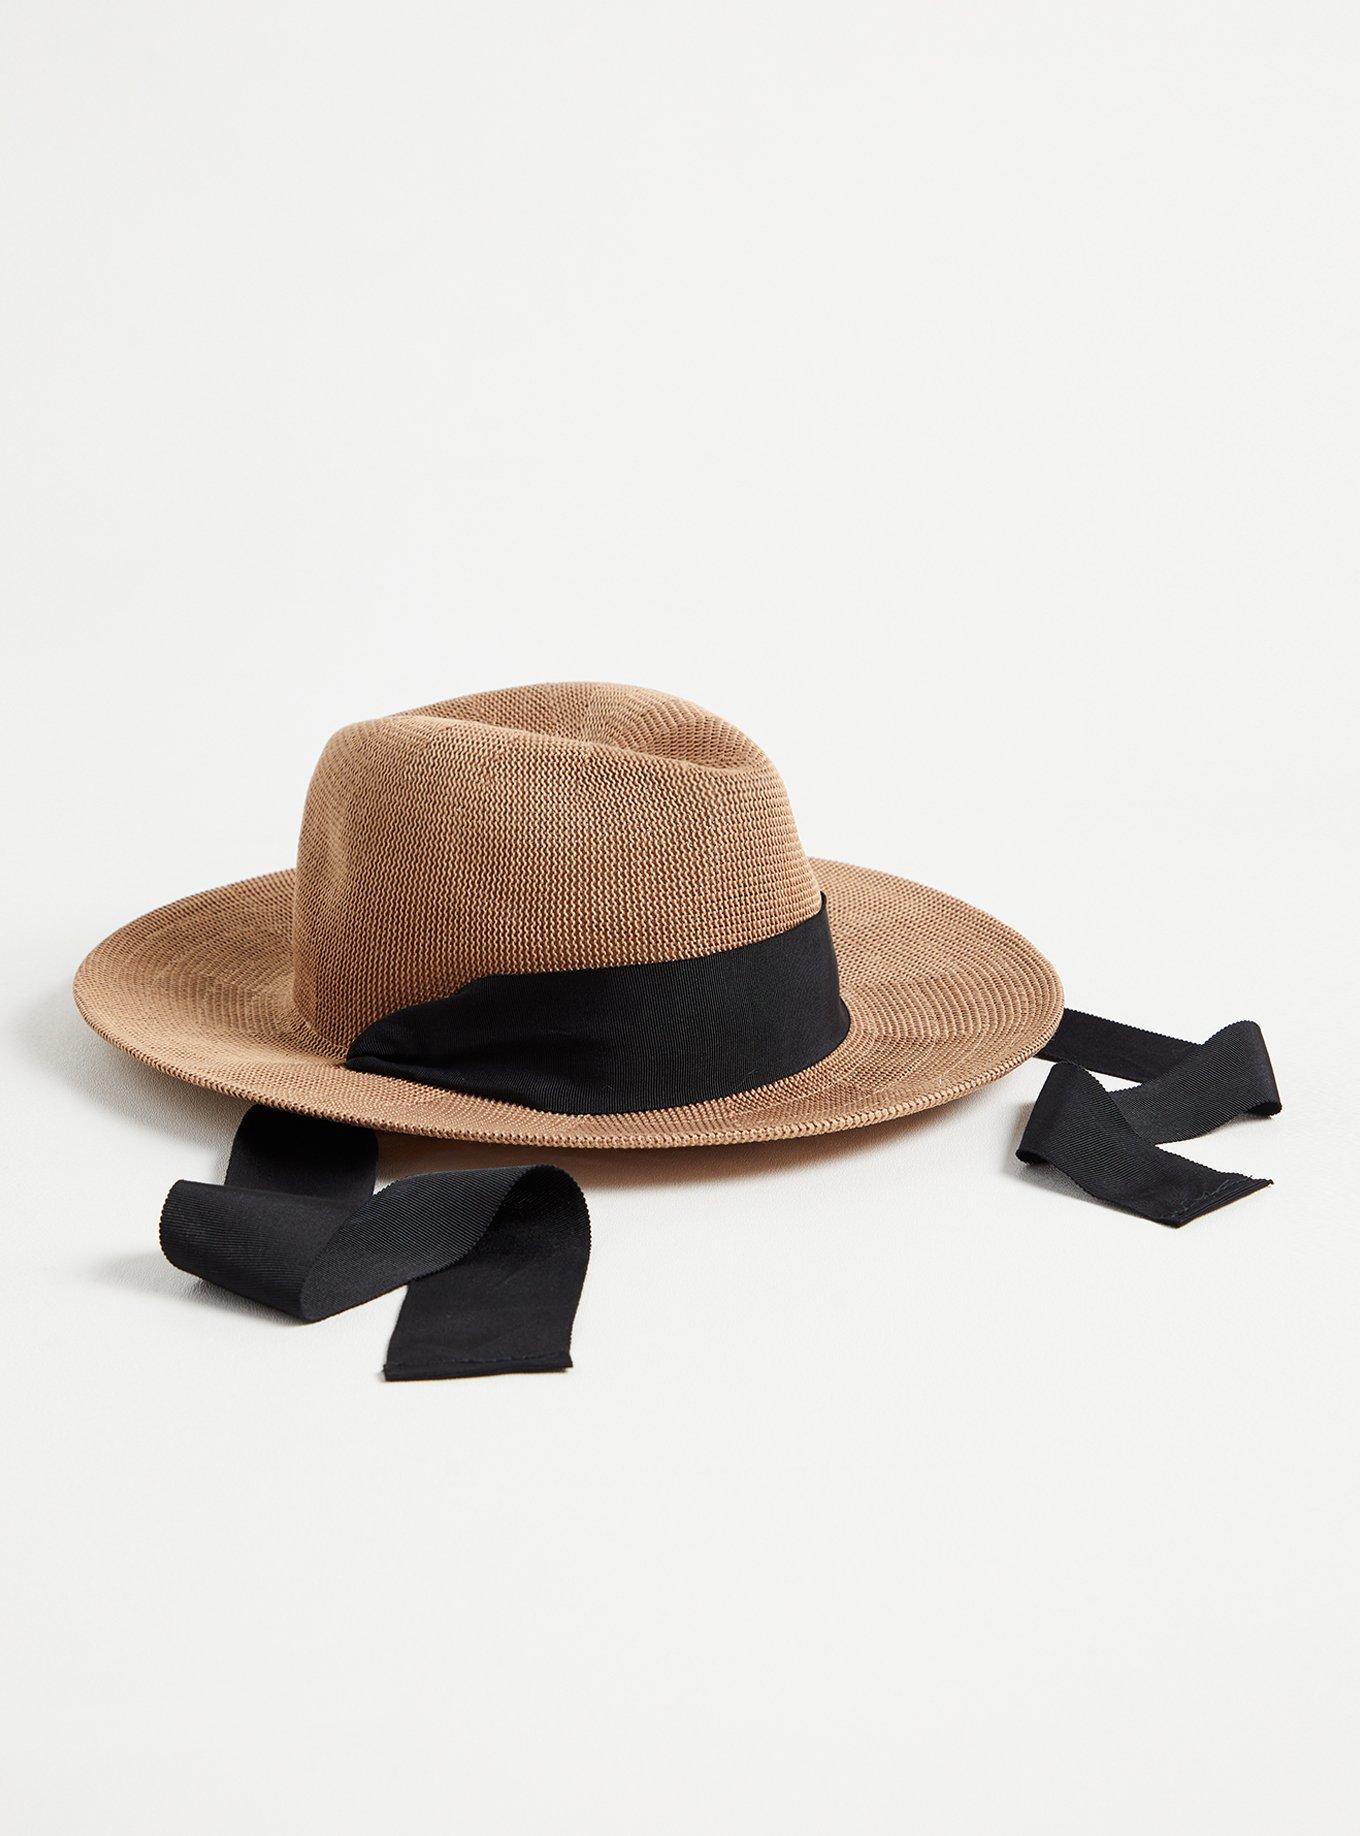 Plus Size - Tan Felt Panama Hat - Torrid